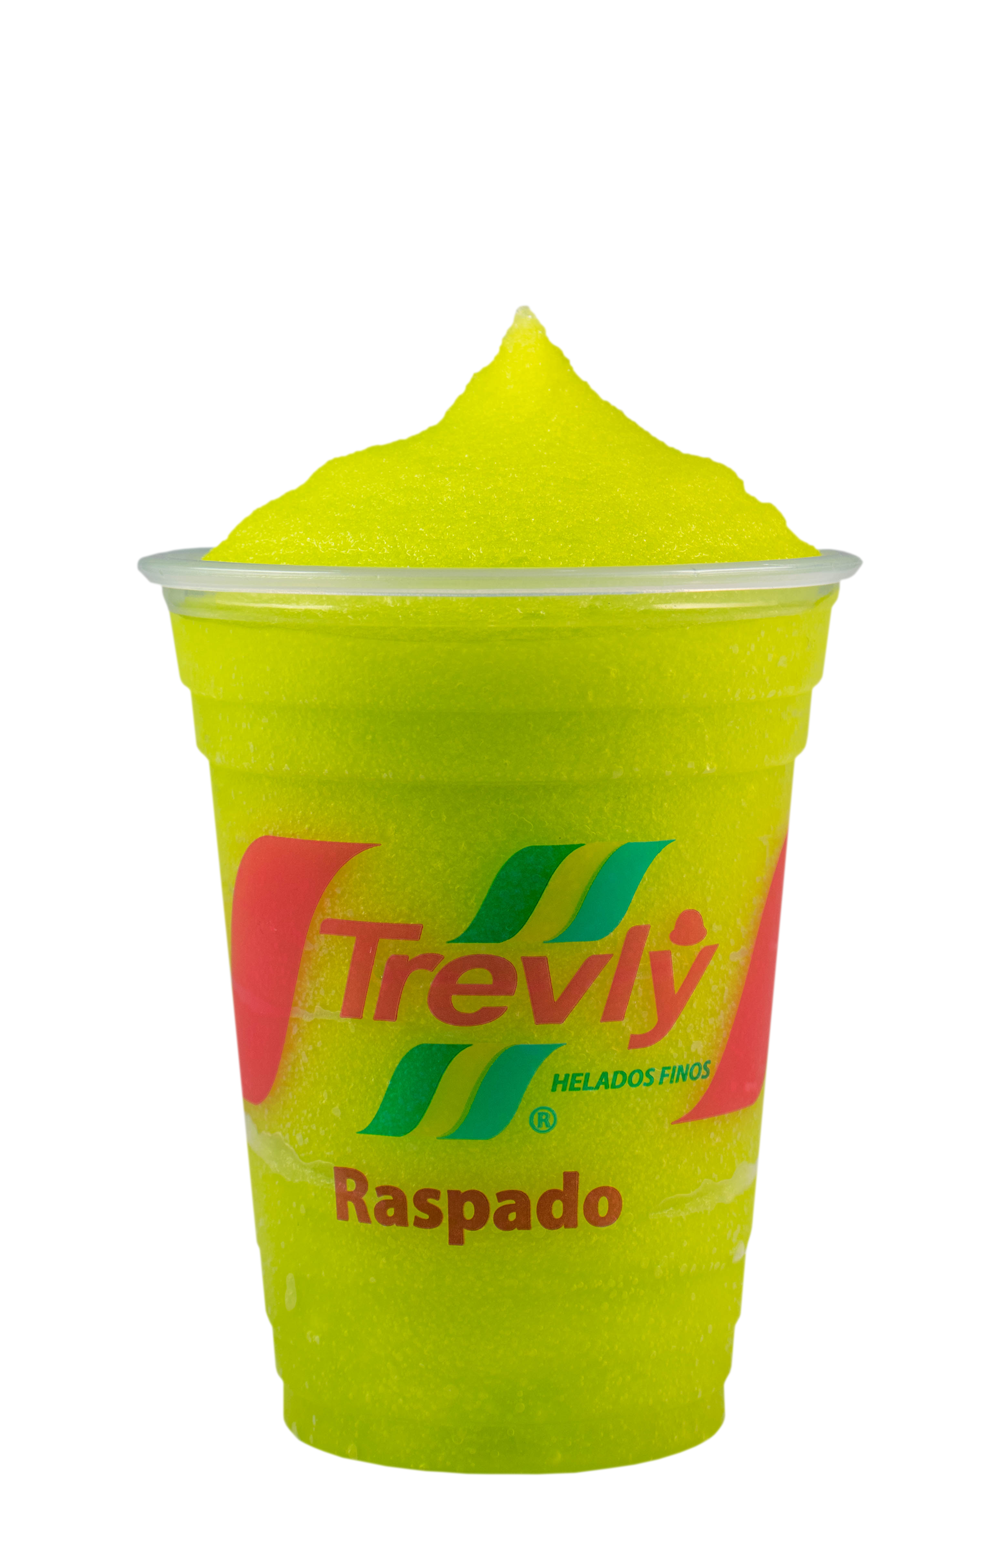 Trevly Yogurt Grande